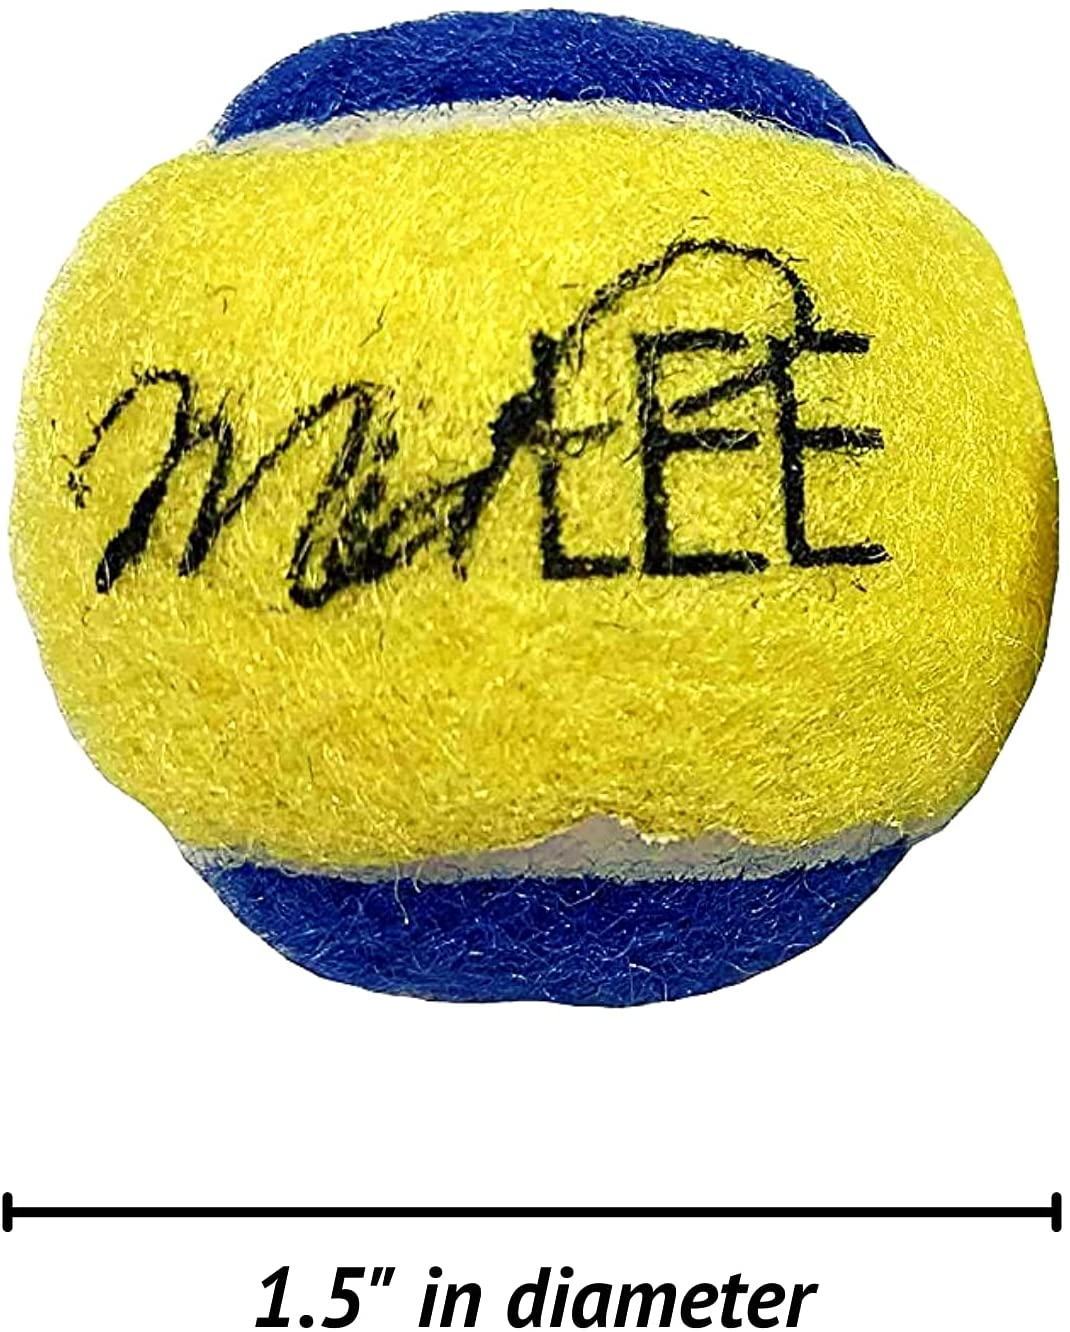 Midlee Mini Dog Tennis Balls - Blue/Yellow- Pack of 4